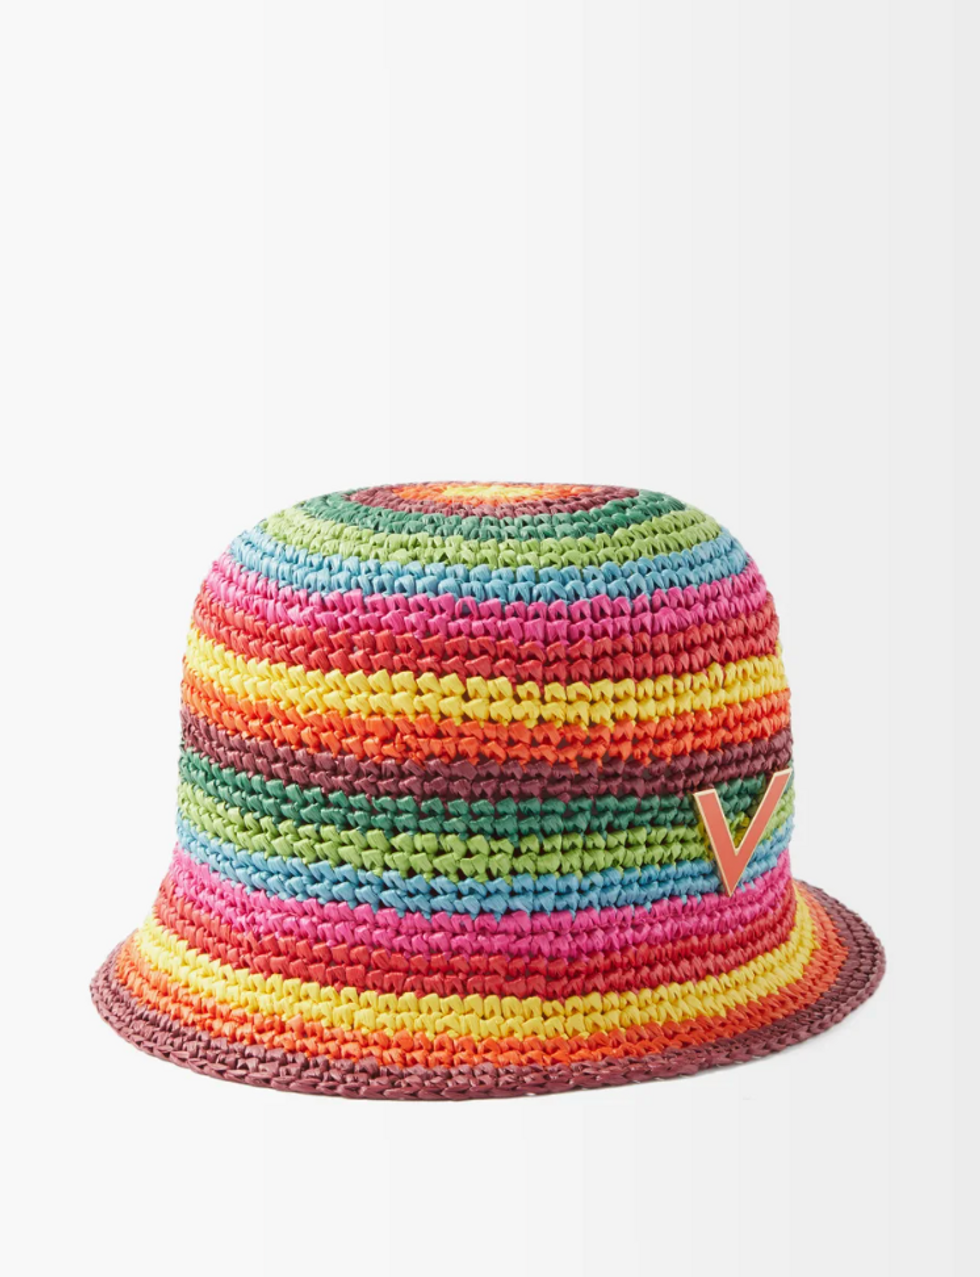 Shop Summer's Crochet Bucket Hat Trend - Coveteur: Inside Closets, Fashion,  Beauty, Health, and Travel